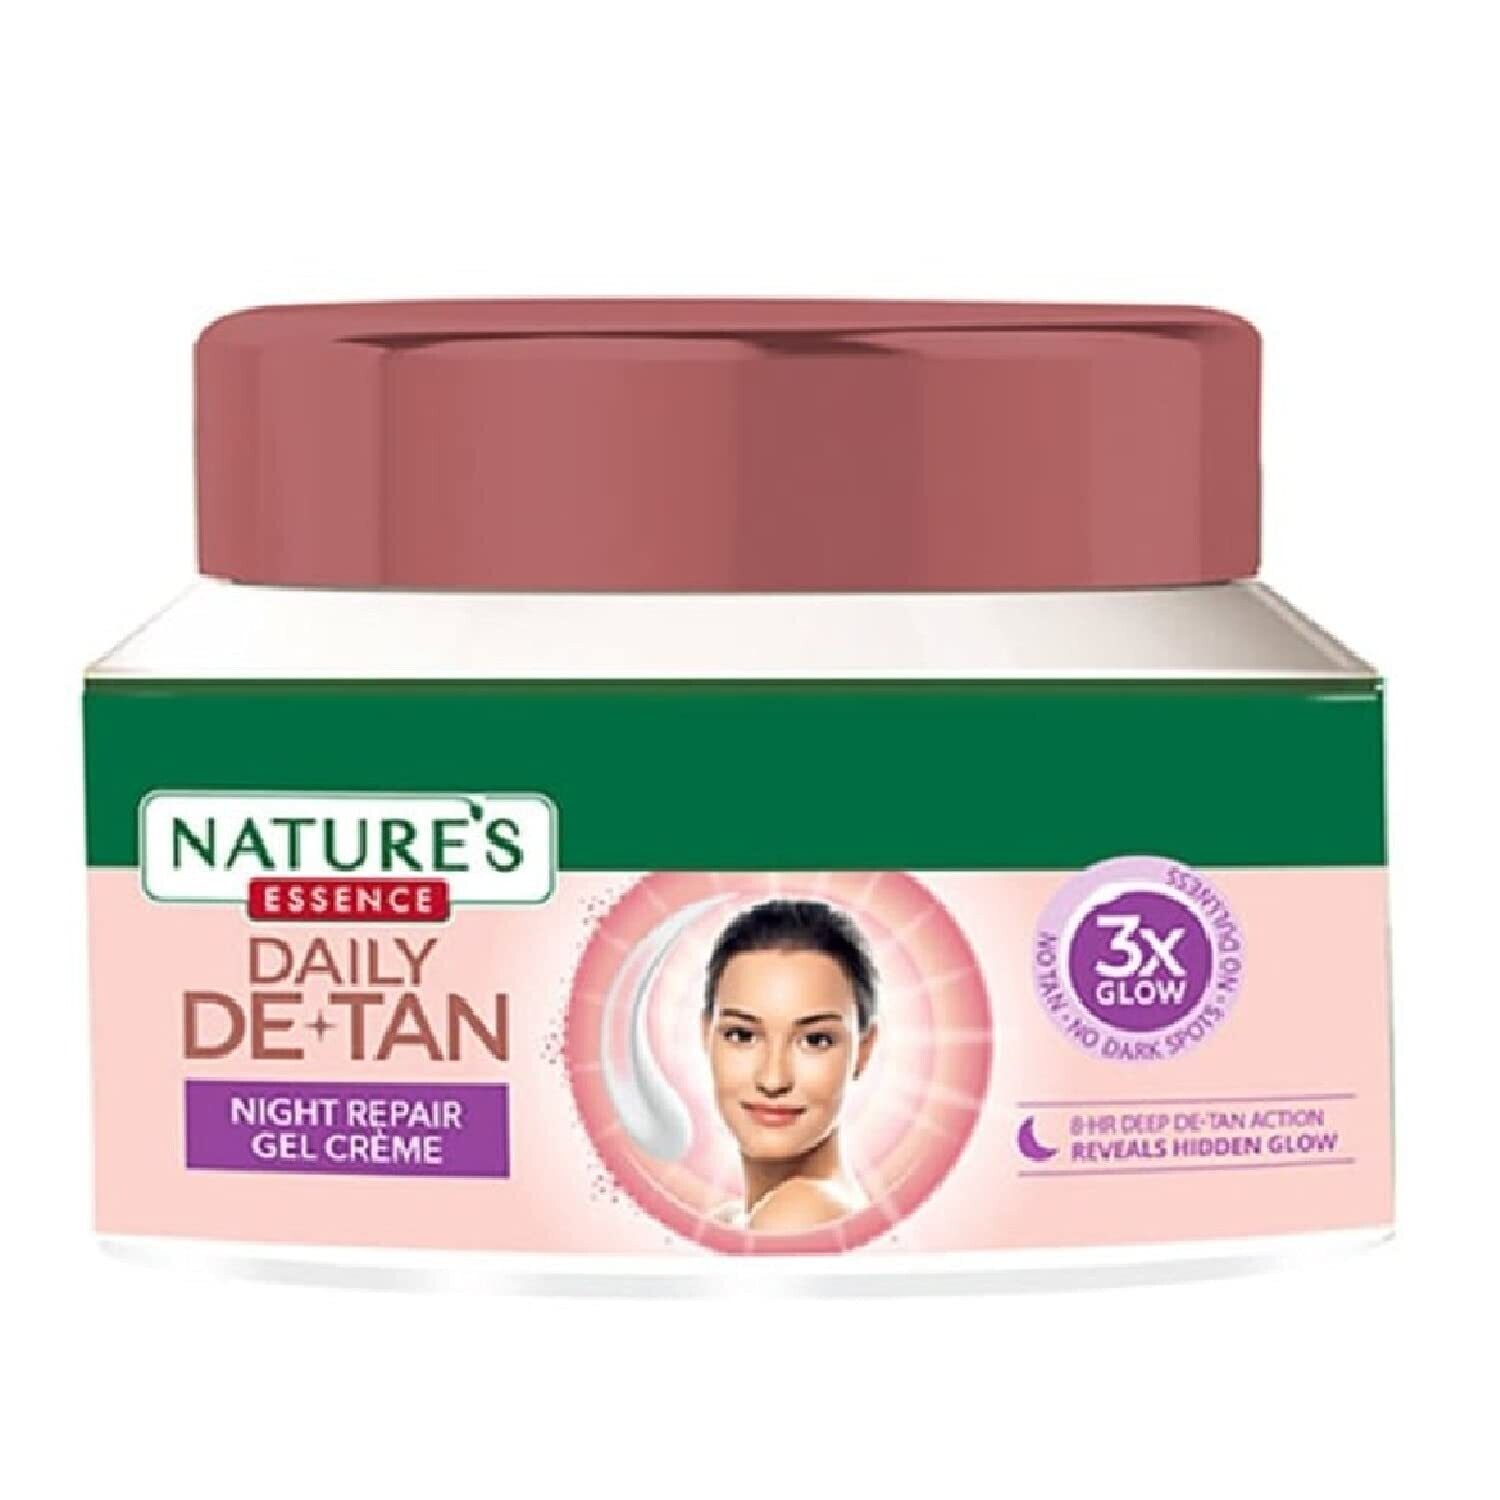 NATURE'S ESSENCE Daily De-Tan Night Repair Gel Crème, 50 g